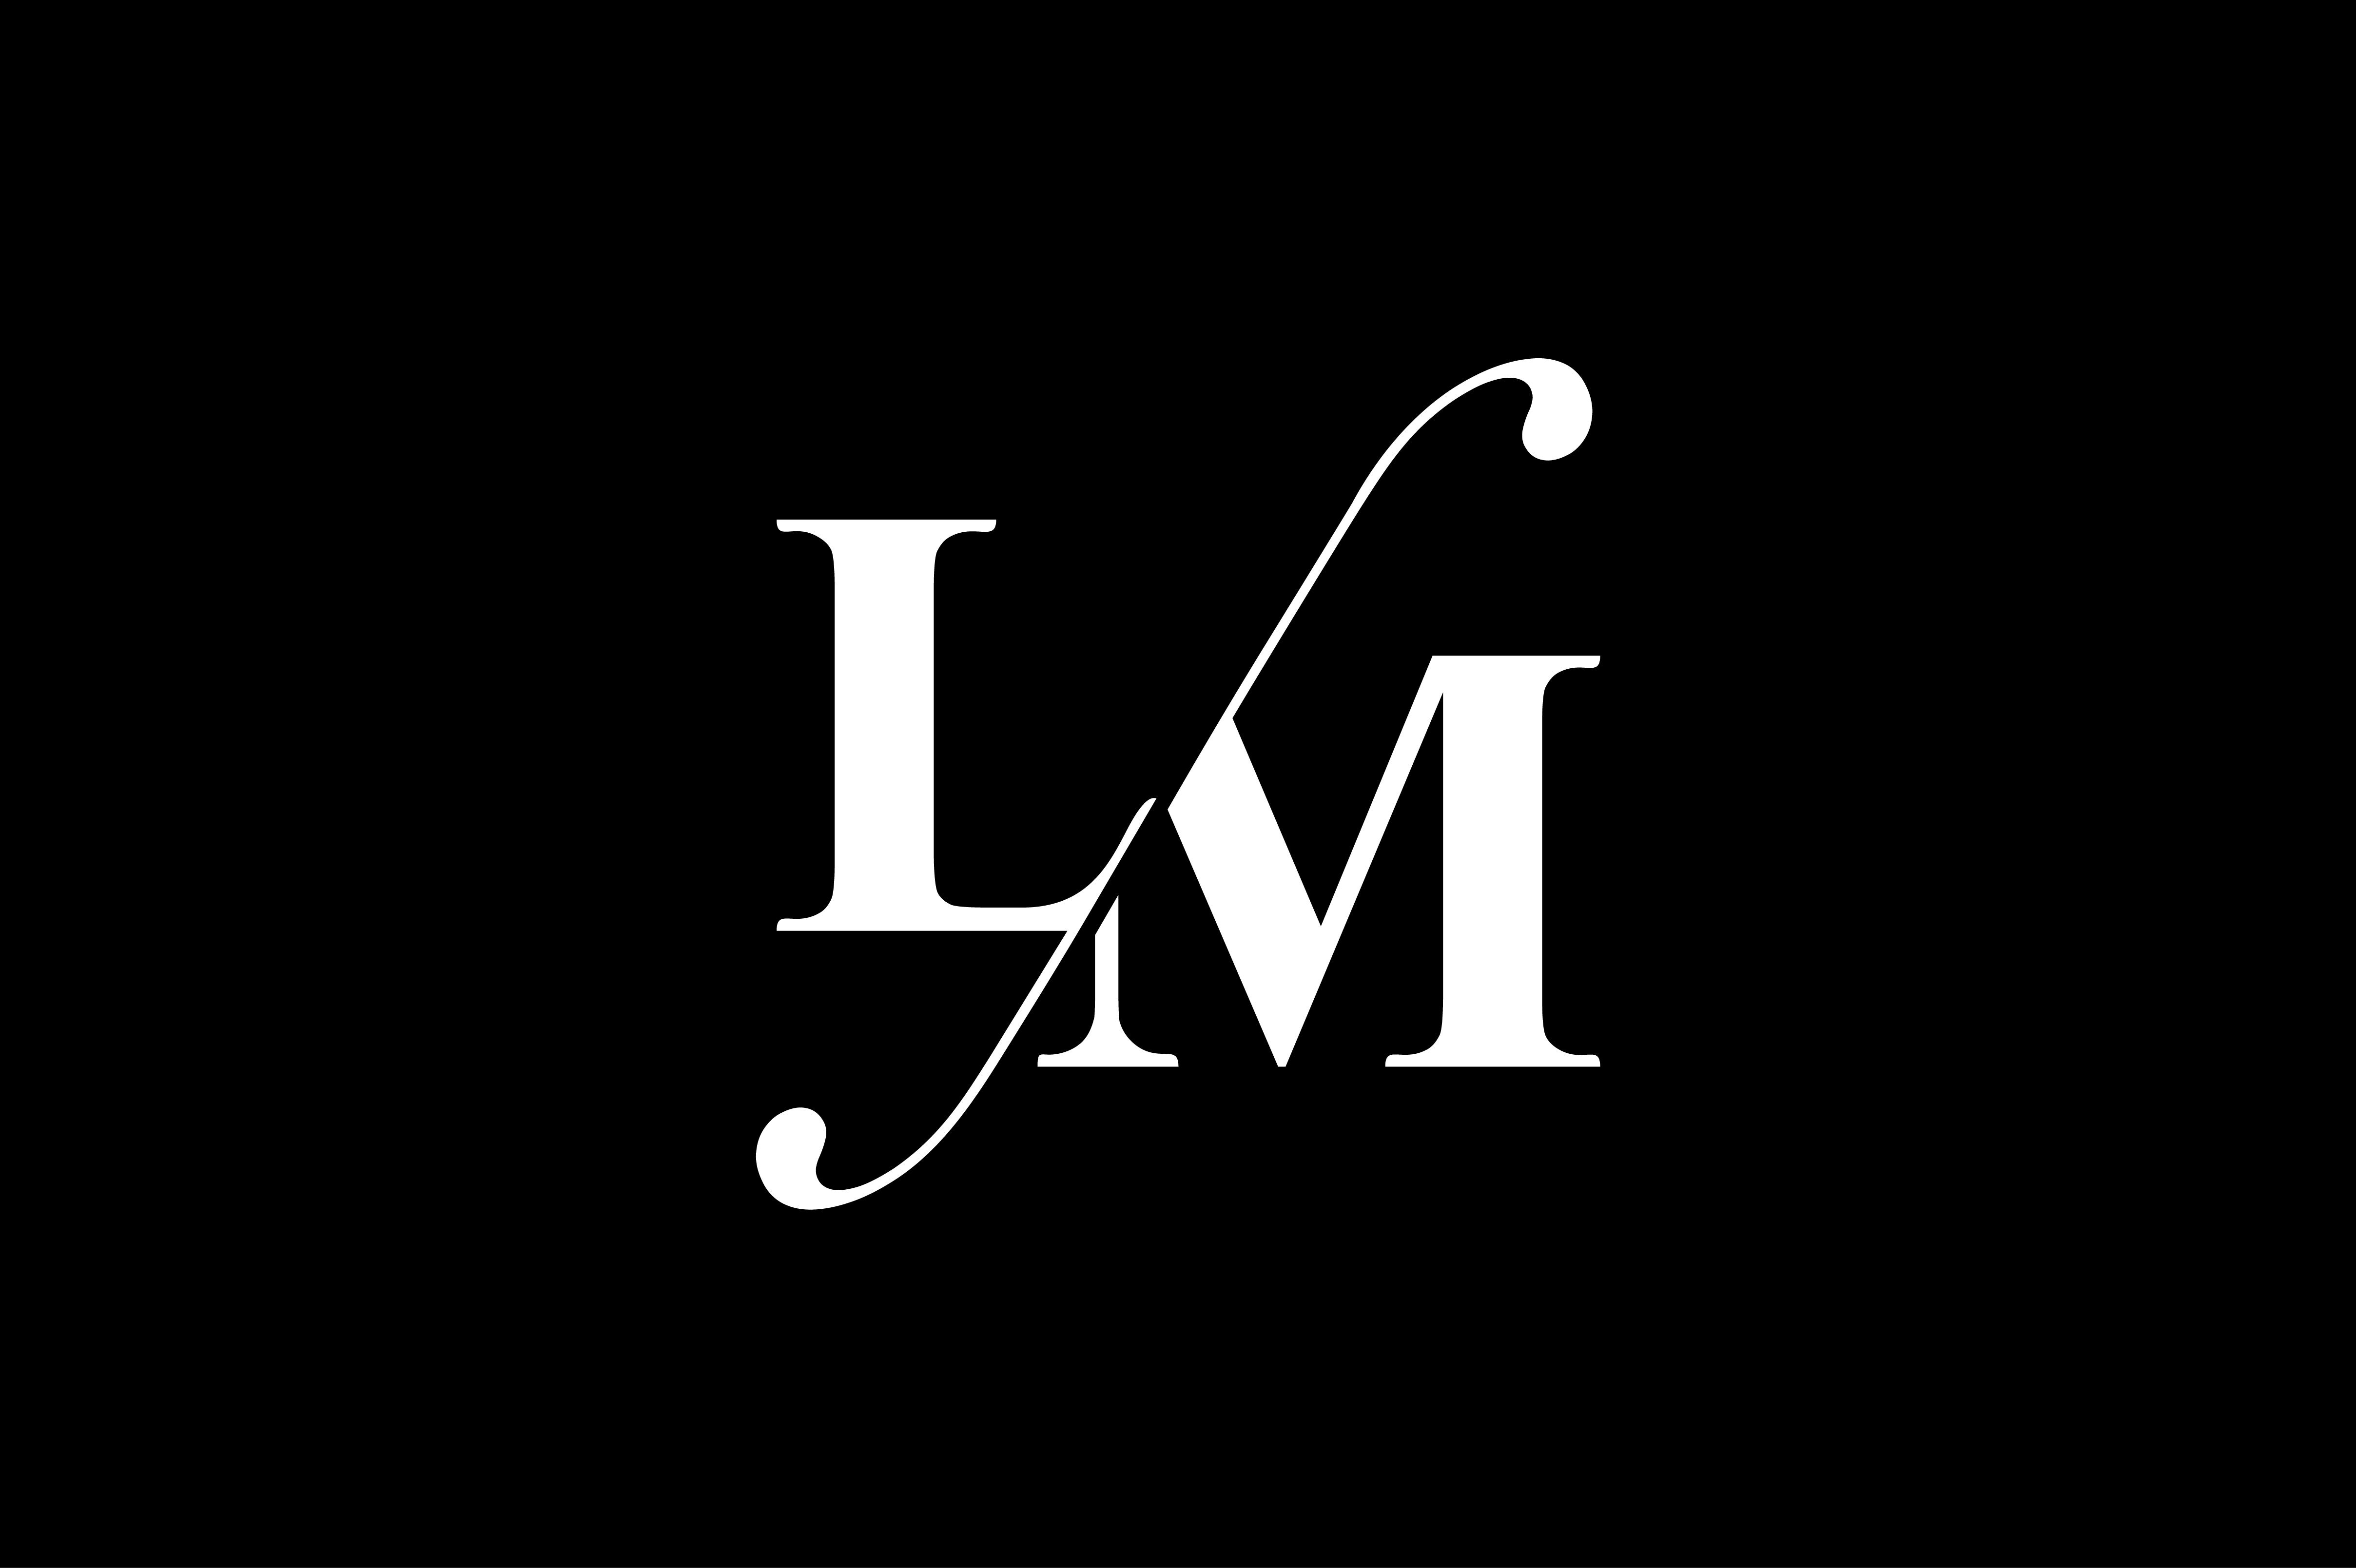 LM Monogram Logo design By Vectorseller.